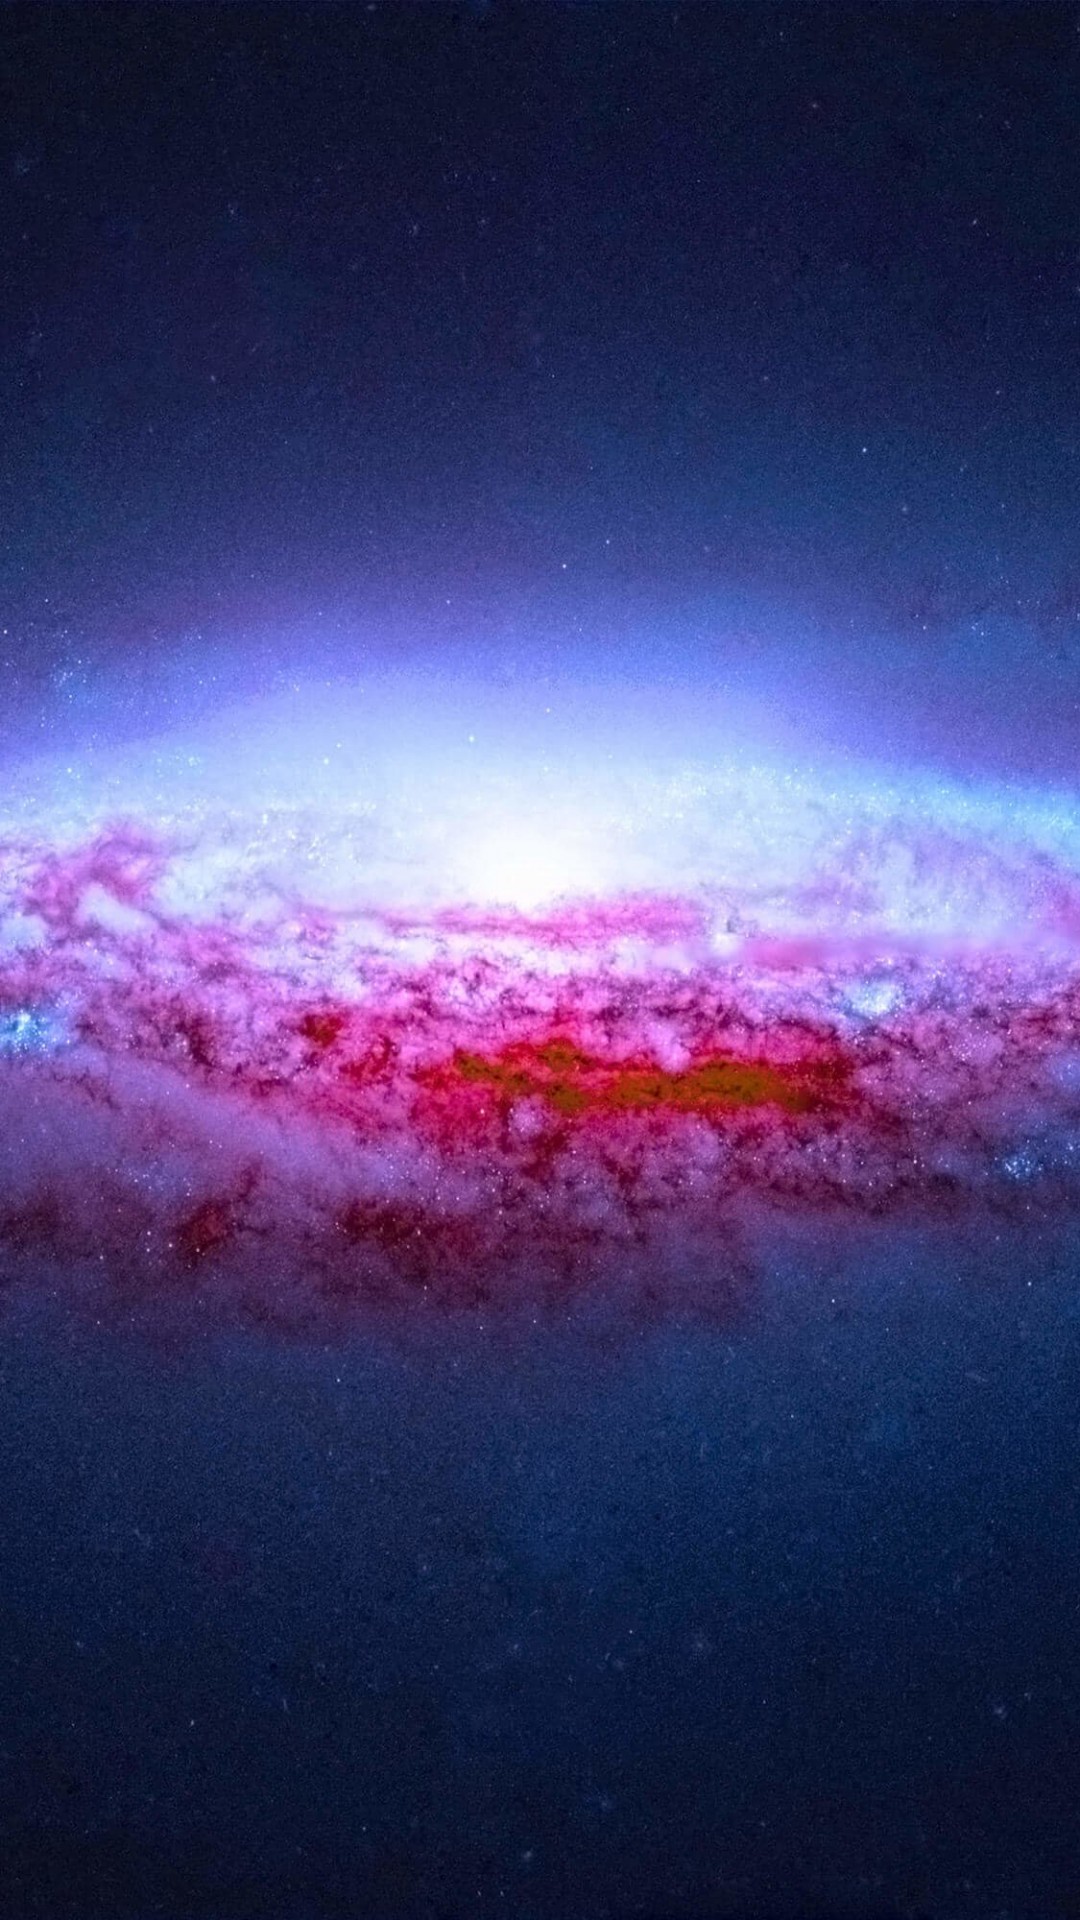 NGC 2683 Spiral Galaxy Wallpaper for Google Nexus 5